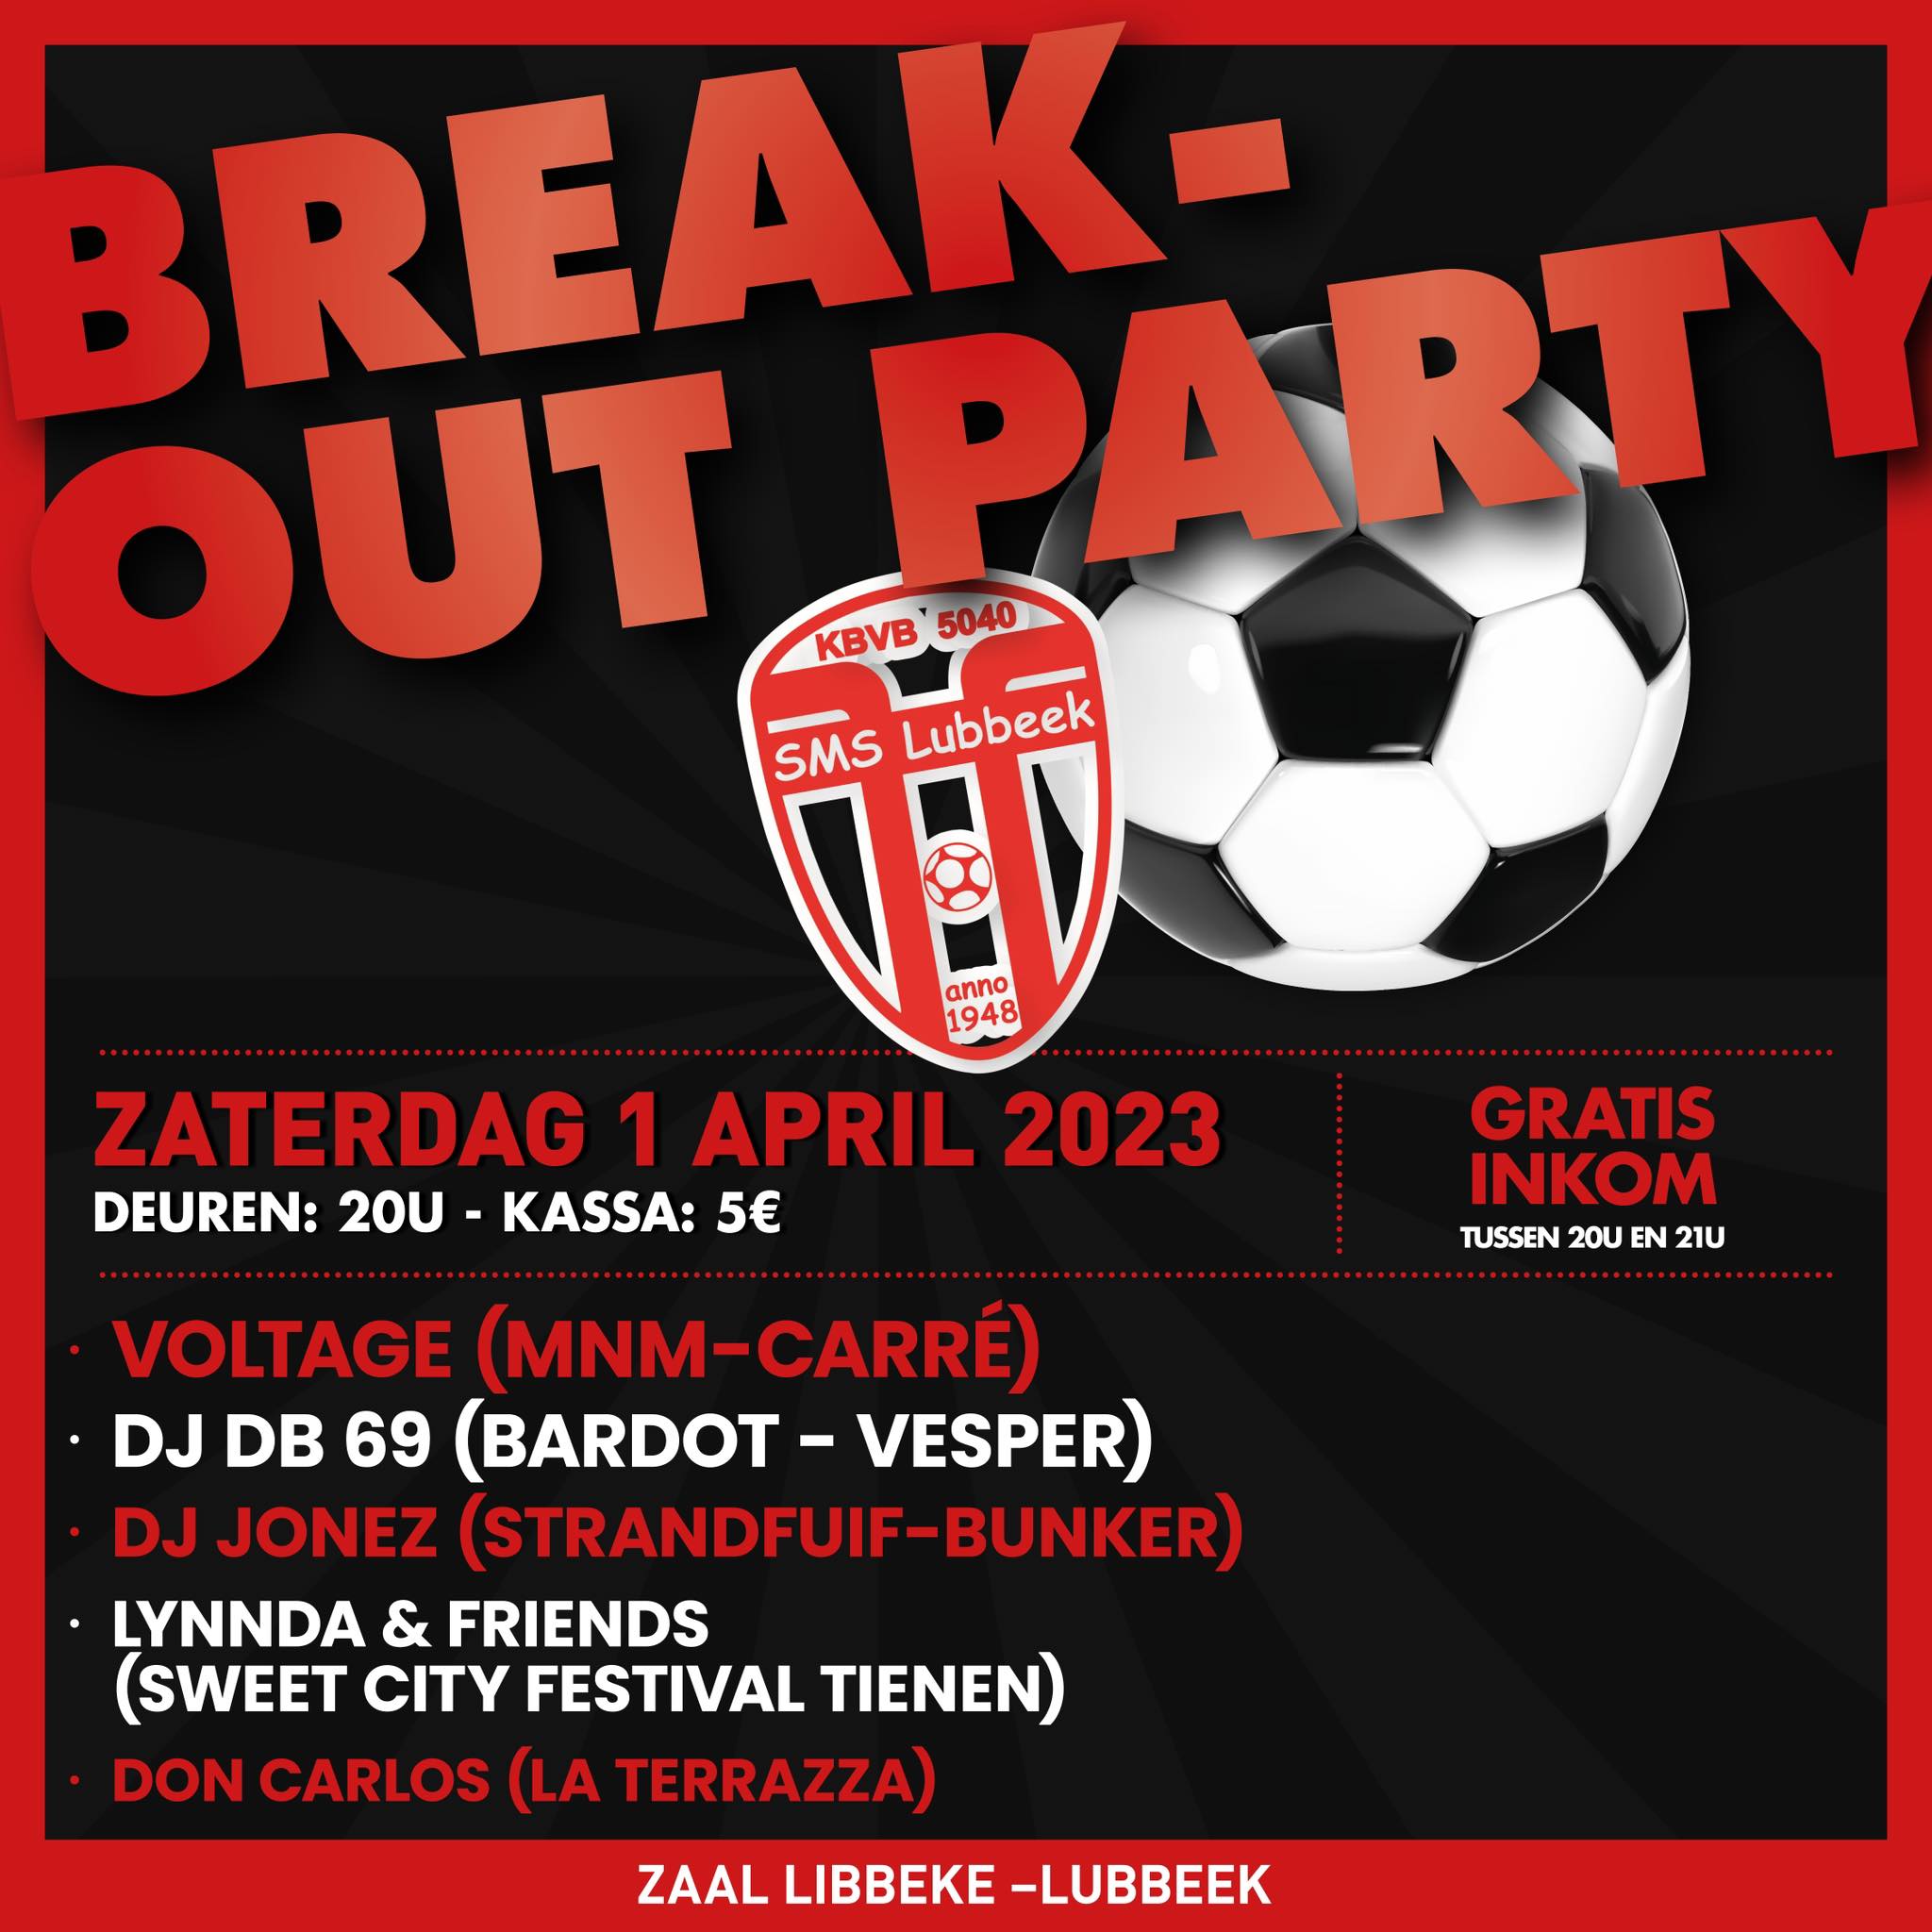 Knaldrang bij SMS Lubbeek, Break-Out Party op … 1 april